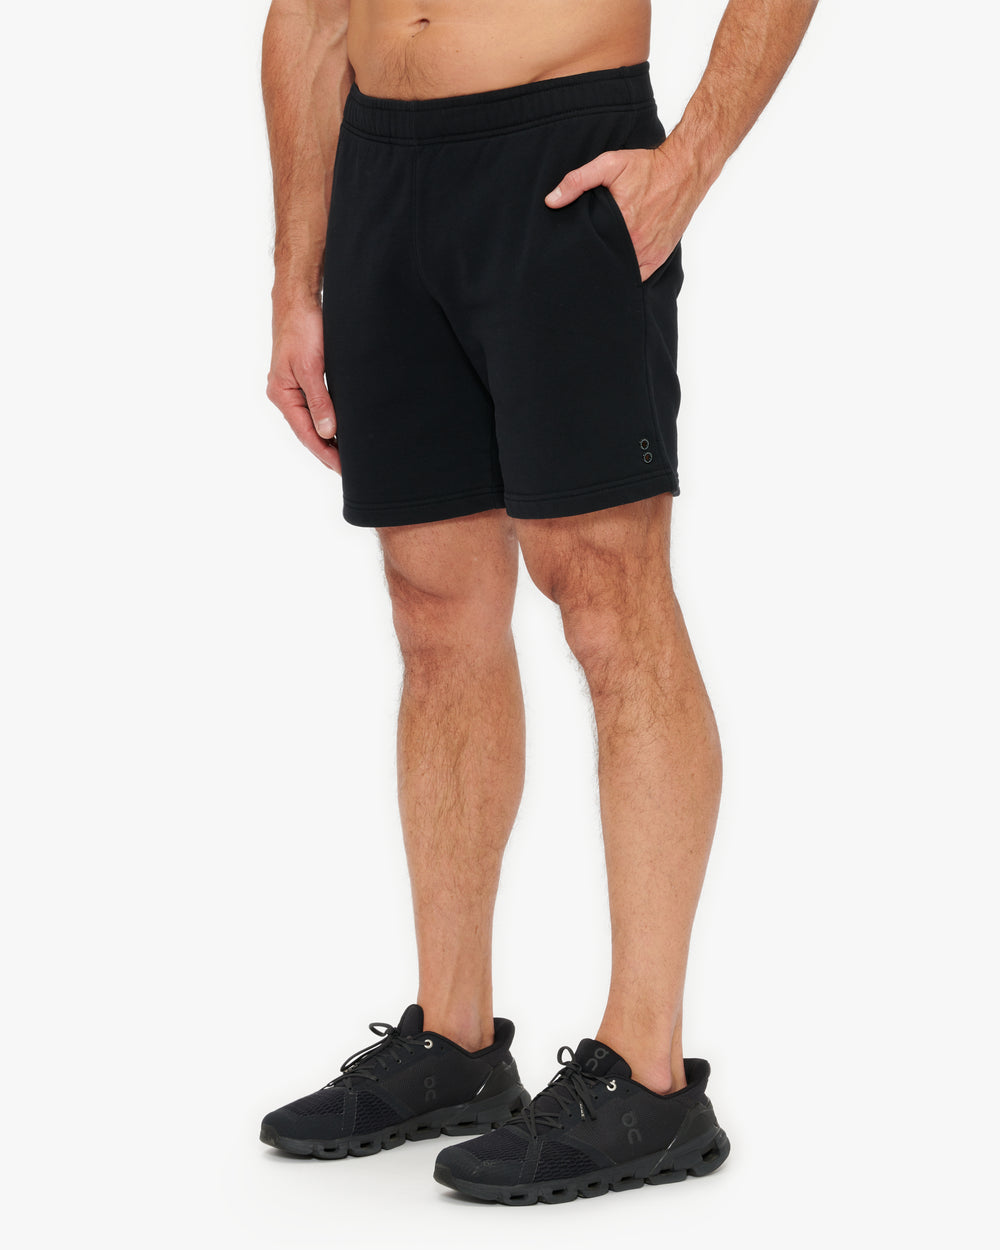 Ron Dorff Jogging Shorts 7" - Unlined